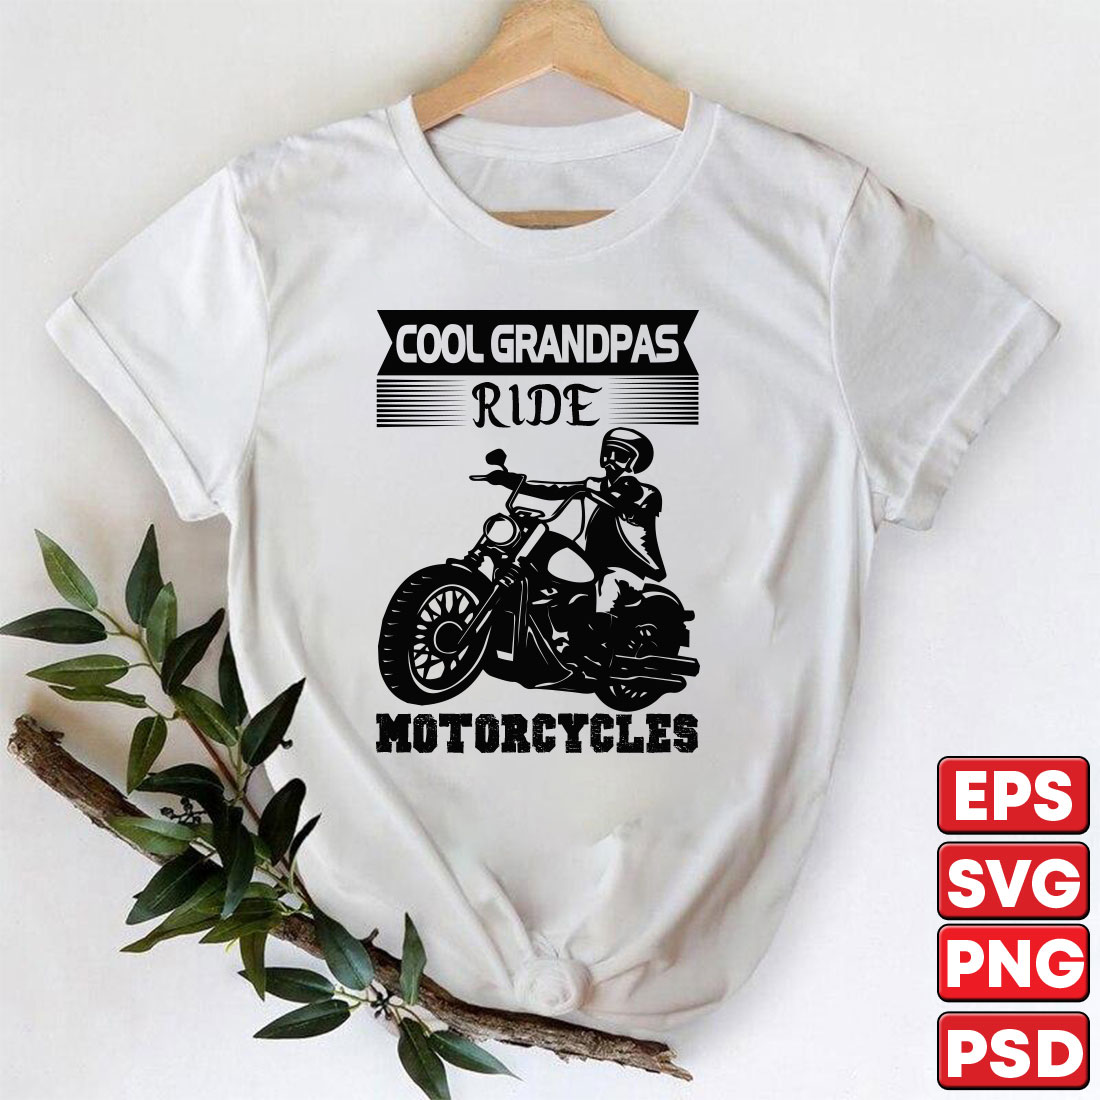 Cool Grandpas Ride Motorcycles - MasterBundles